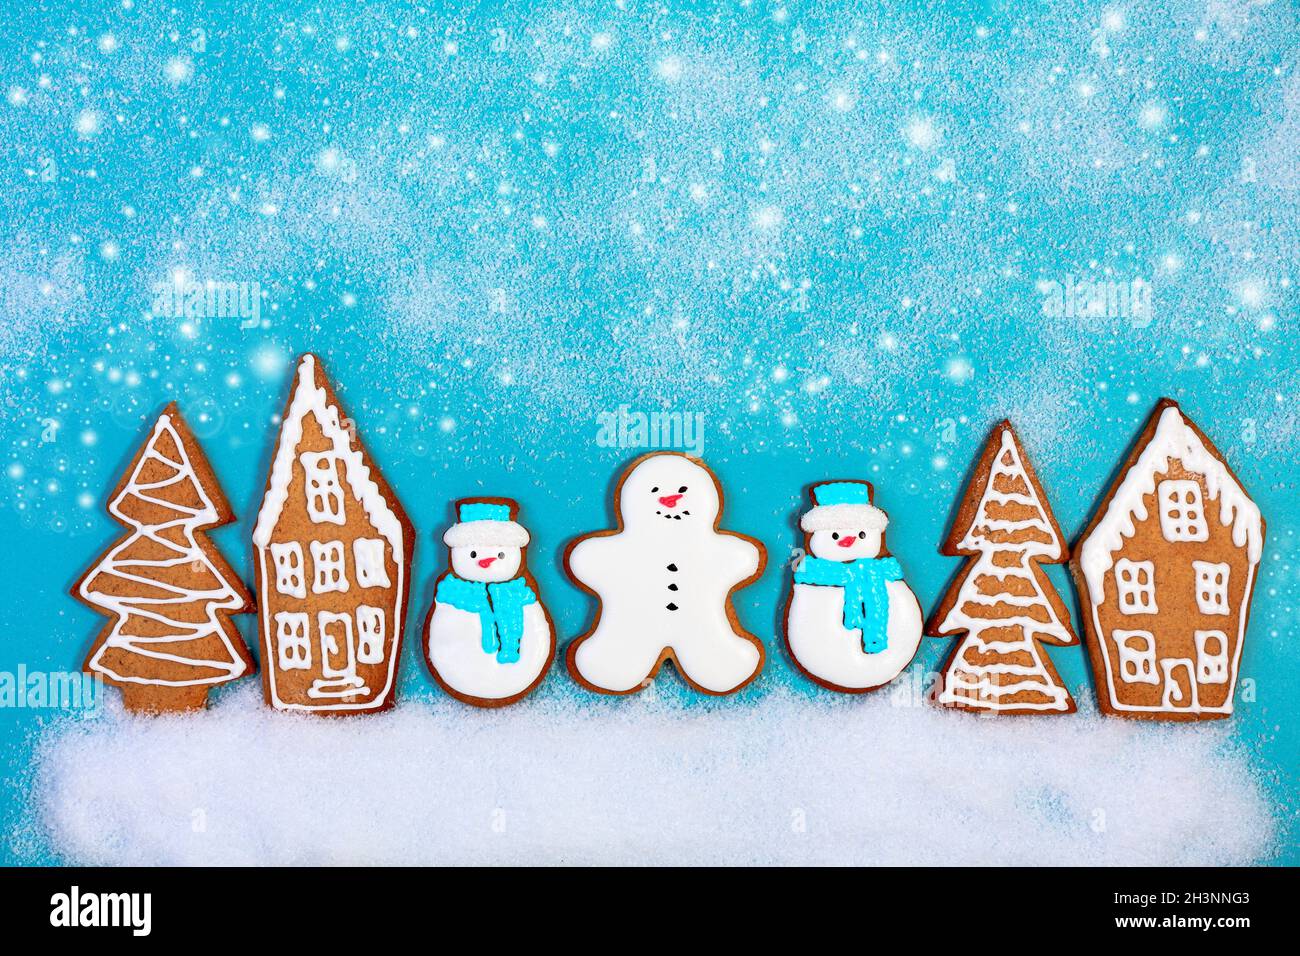 Christmas ginger cookies. Stock Photo